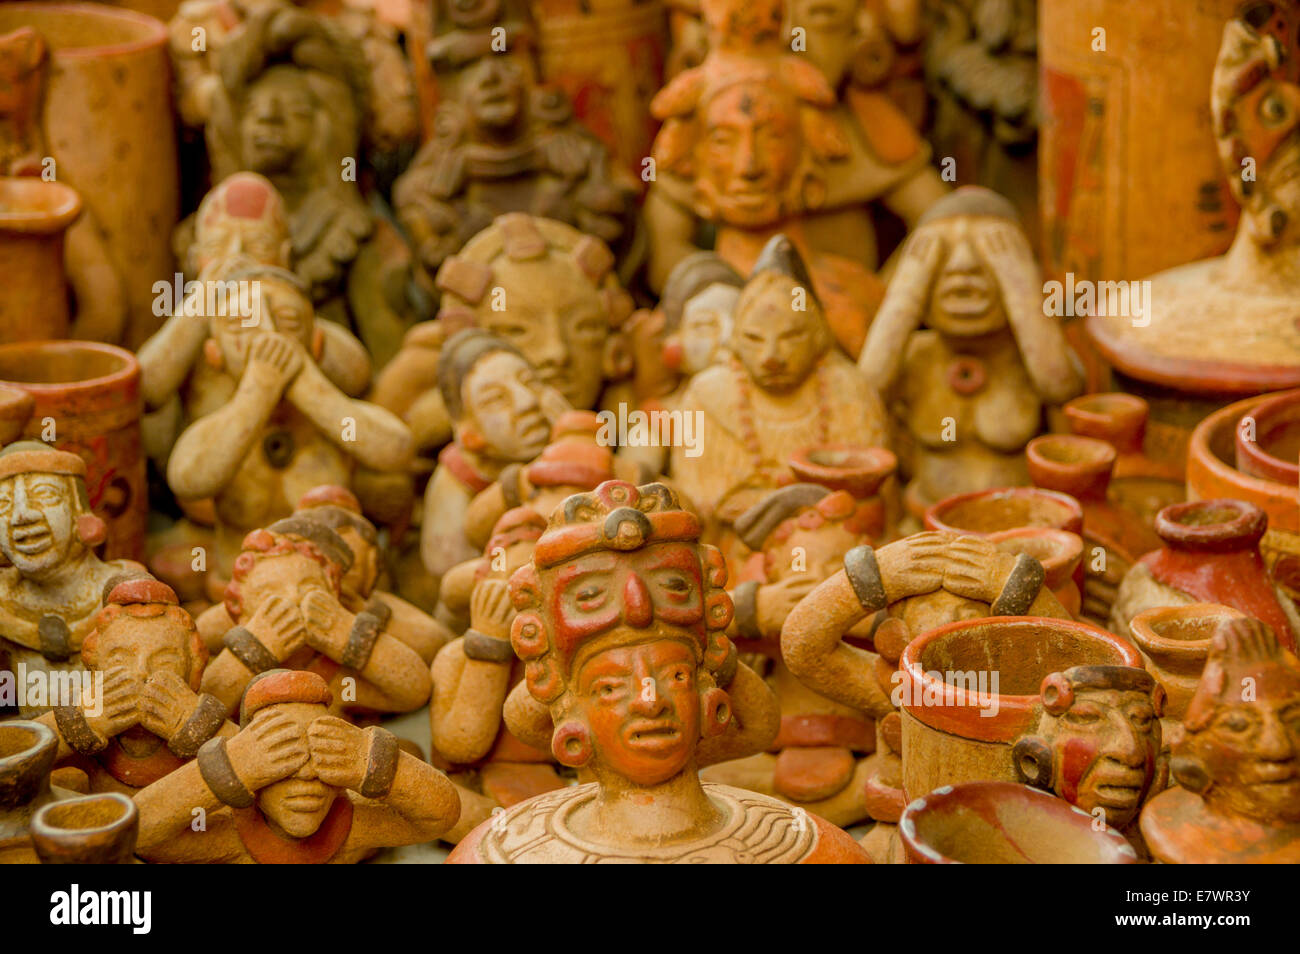 mayan pottery figurines Stock Photo